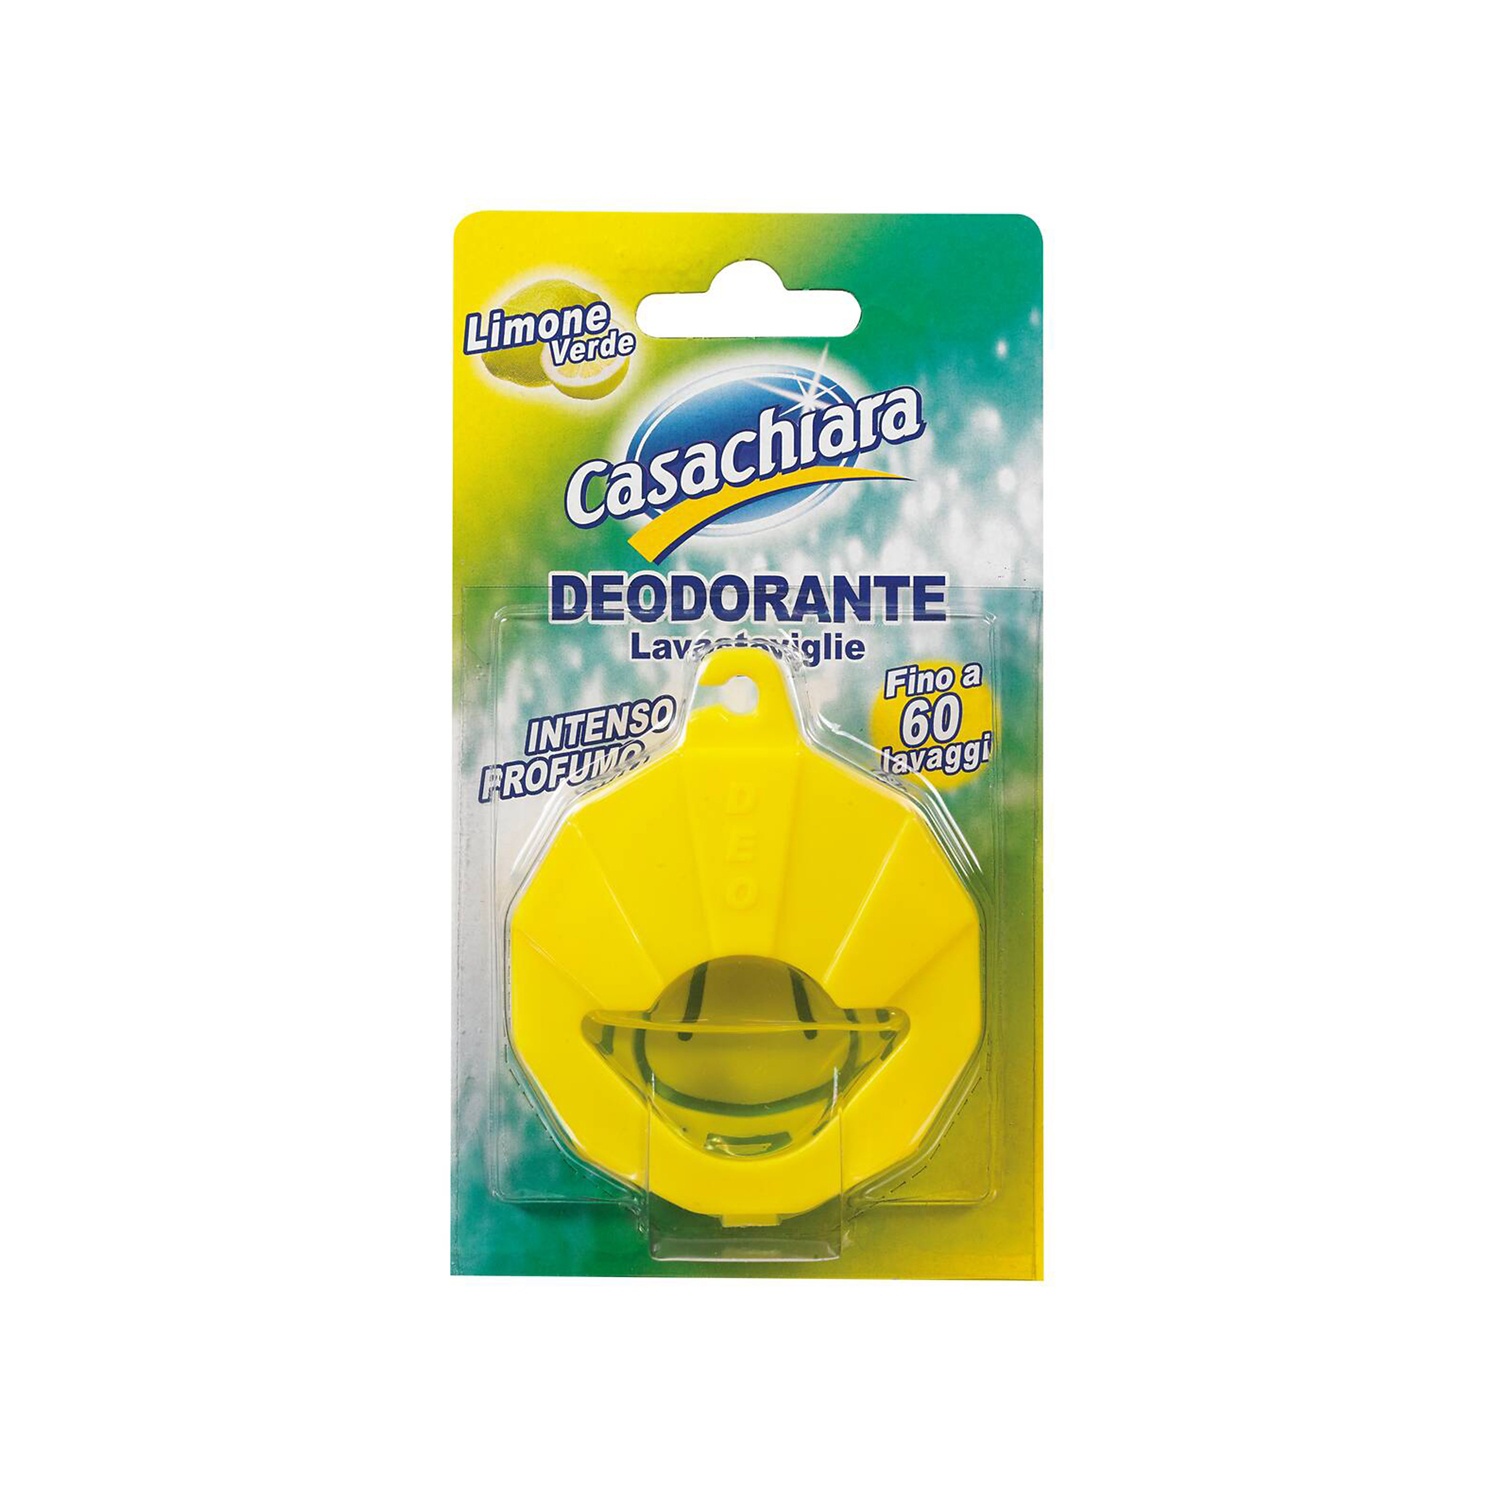 CASACHIARA Deodorante per lavastoviglie